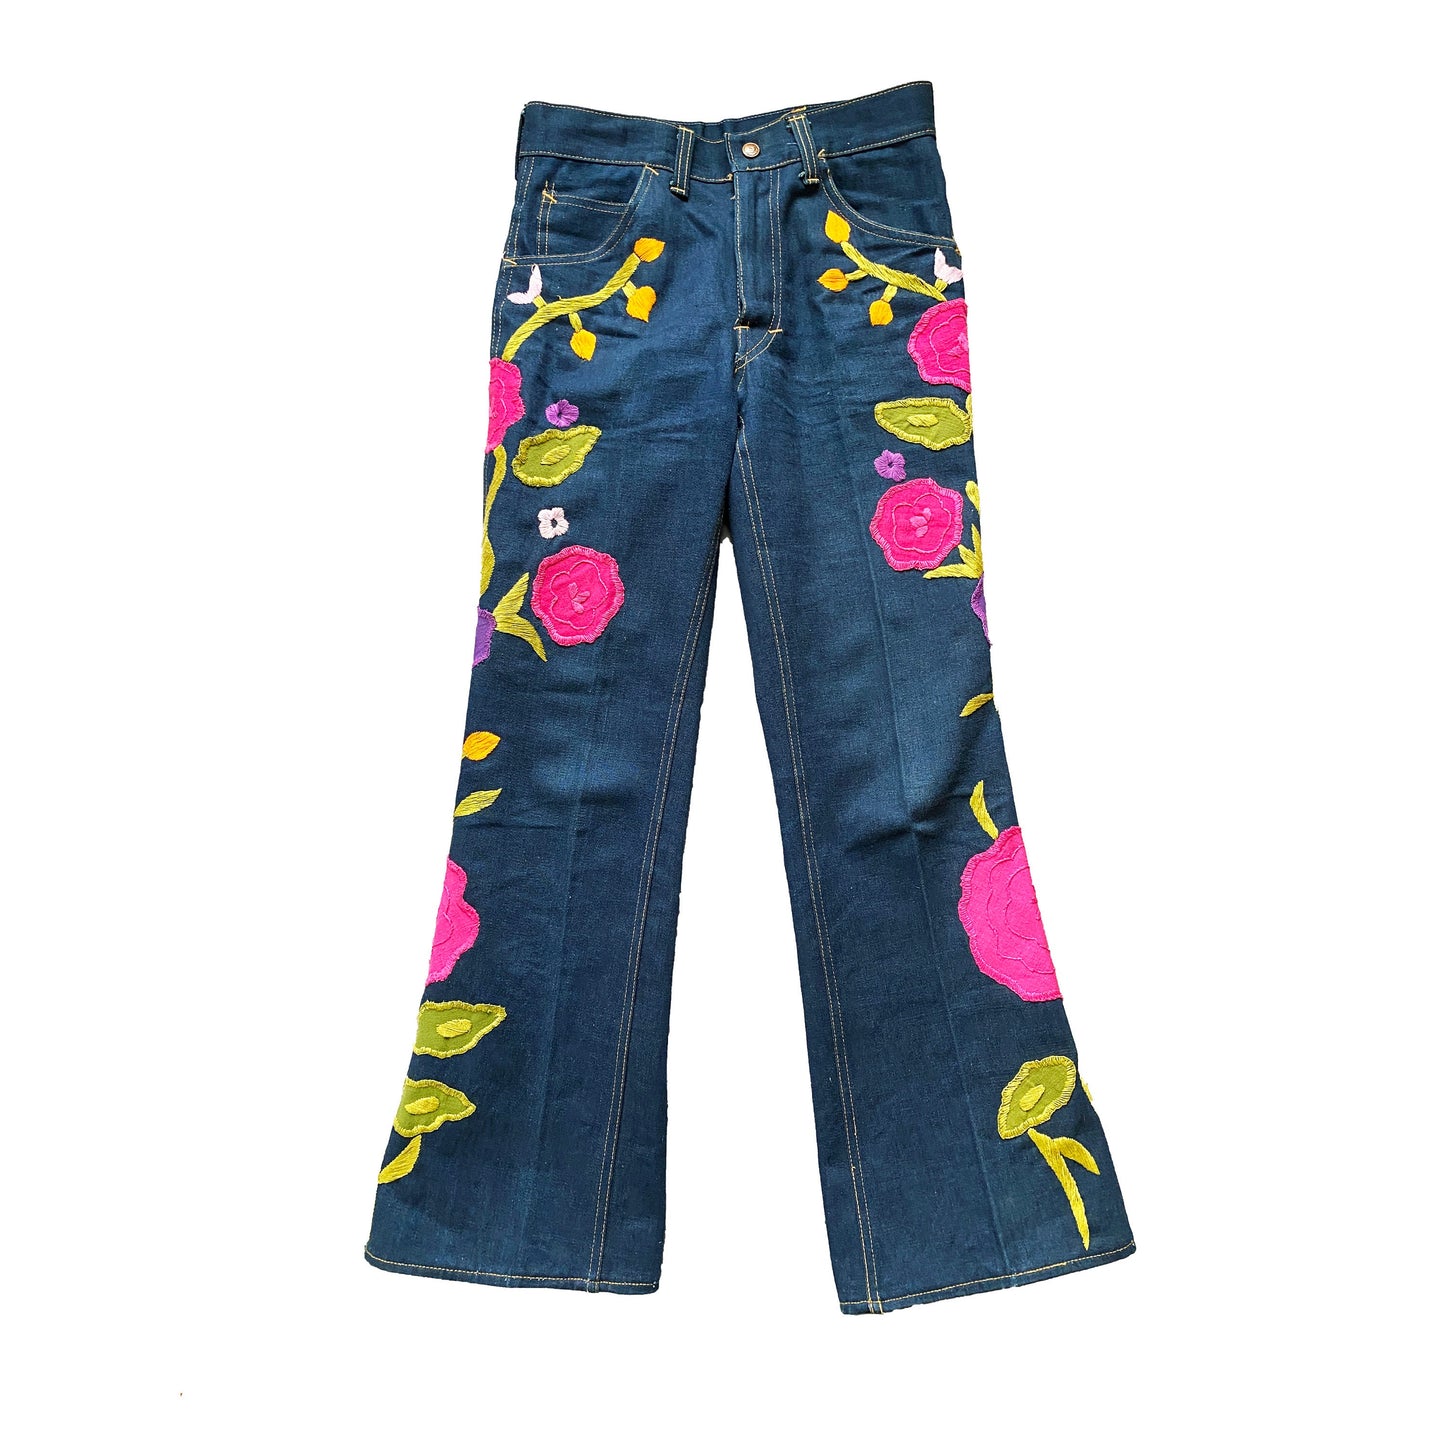 1970s Denim Floral Embroidered Jeans Flower Power Dark Wash Jeans Boho Hippie Flare Jeans Vintage Rocker / Size Medium 8/10